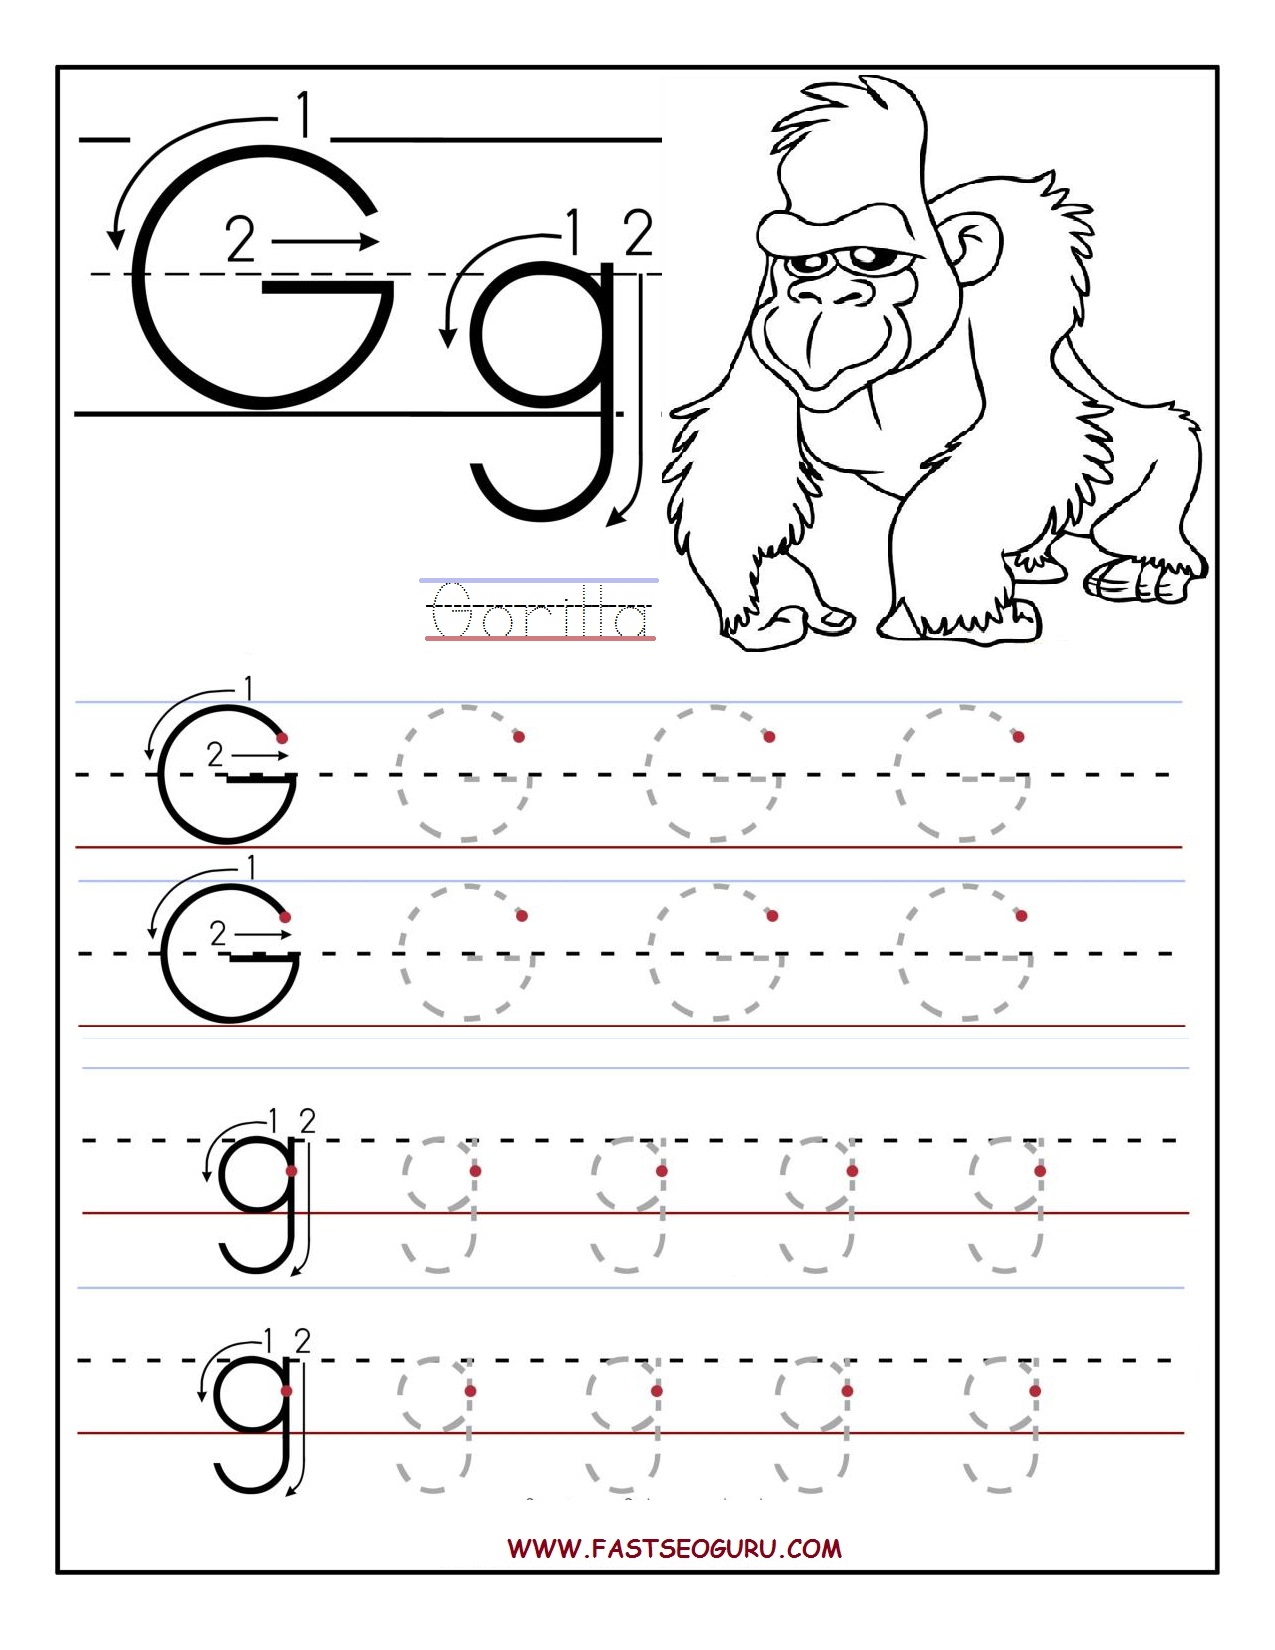 Letter G Tracing Worksheets Preschool